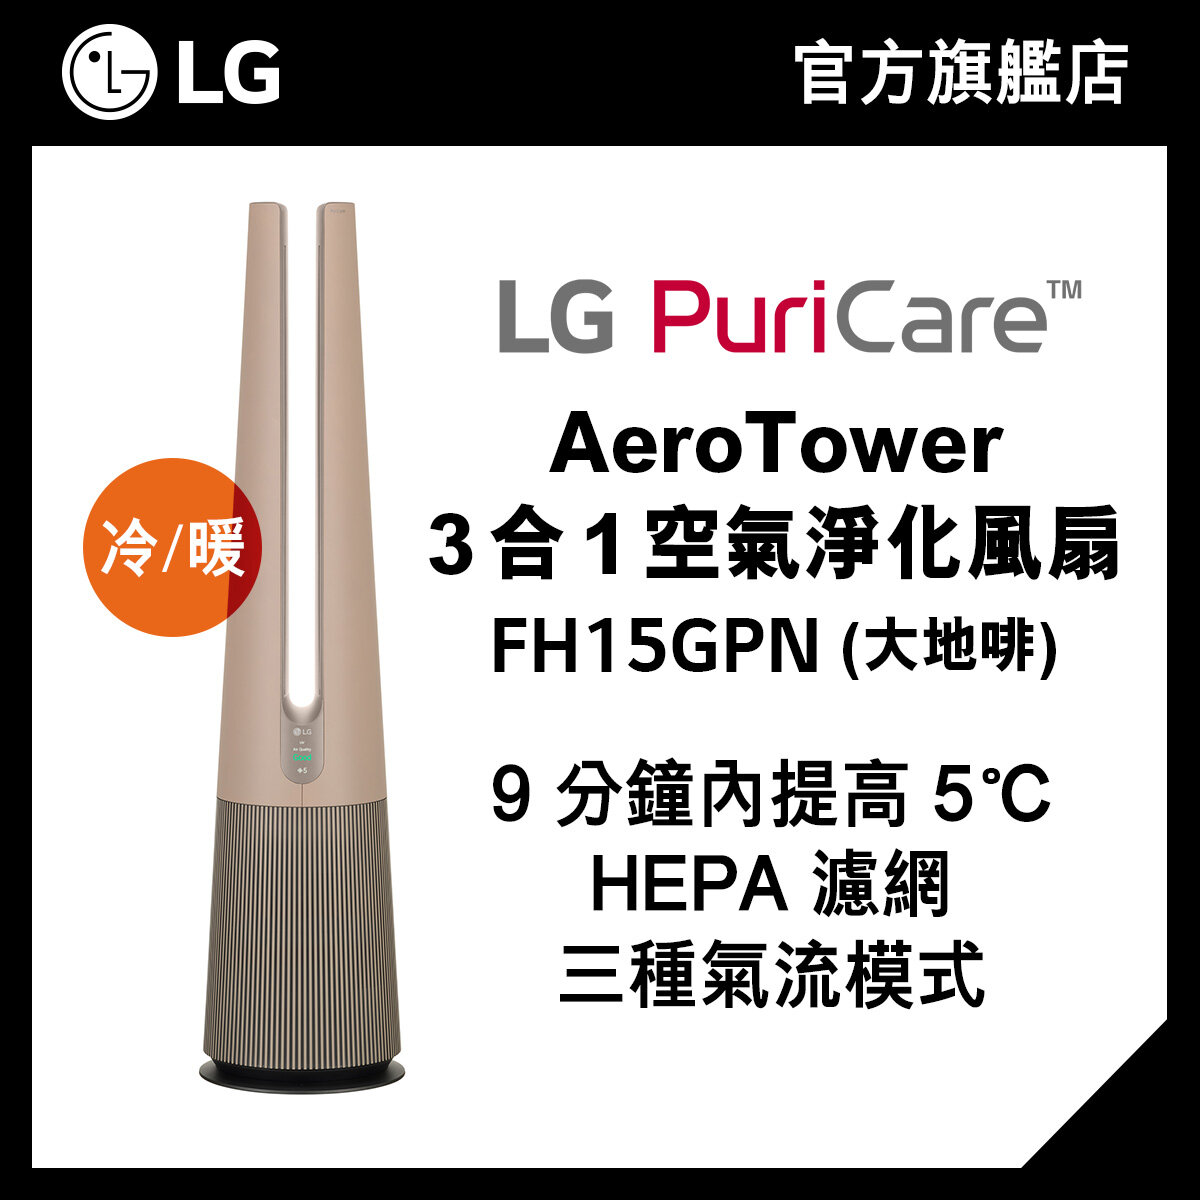 LG PuriCare™ AeroTower 3 合 1 空氣淨化風扇 (大地啡), 設暖風